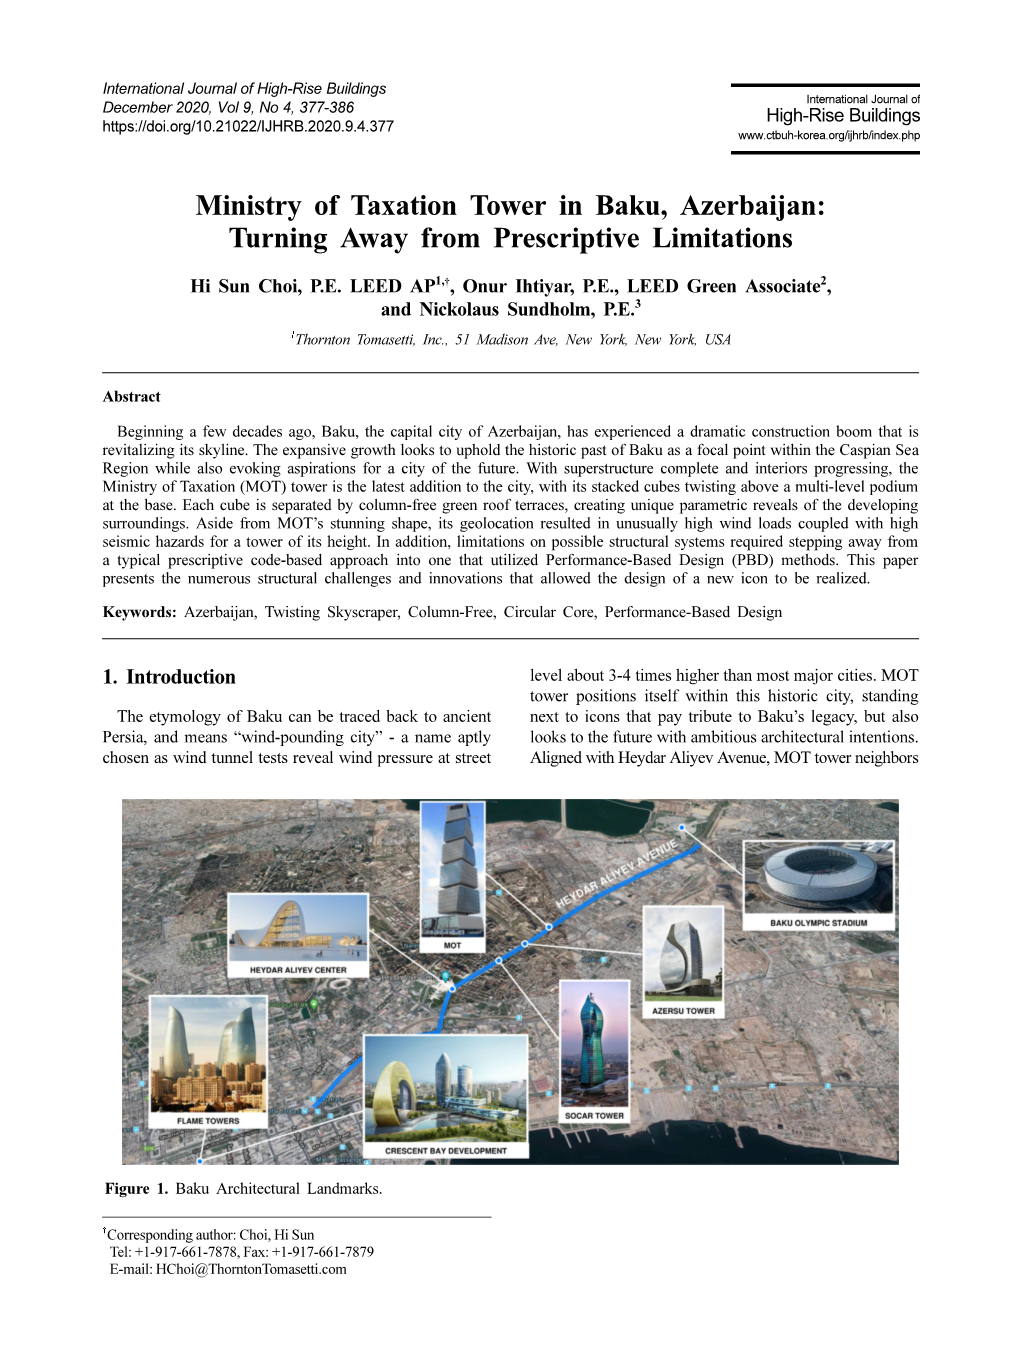 Ministry of Taxation Tower in Baku, Azerbaijan: Turning Away from Prescriptive Limitations